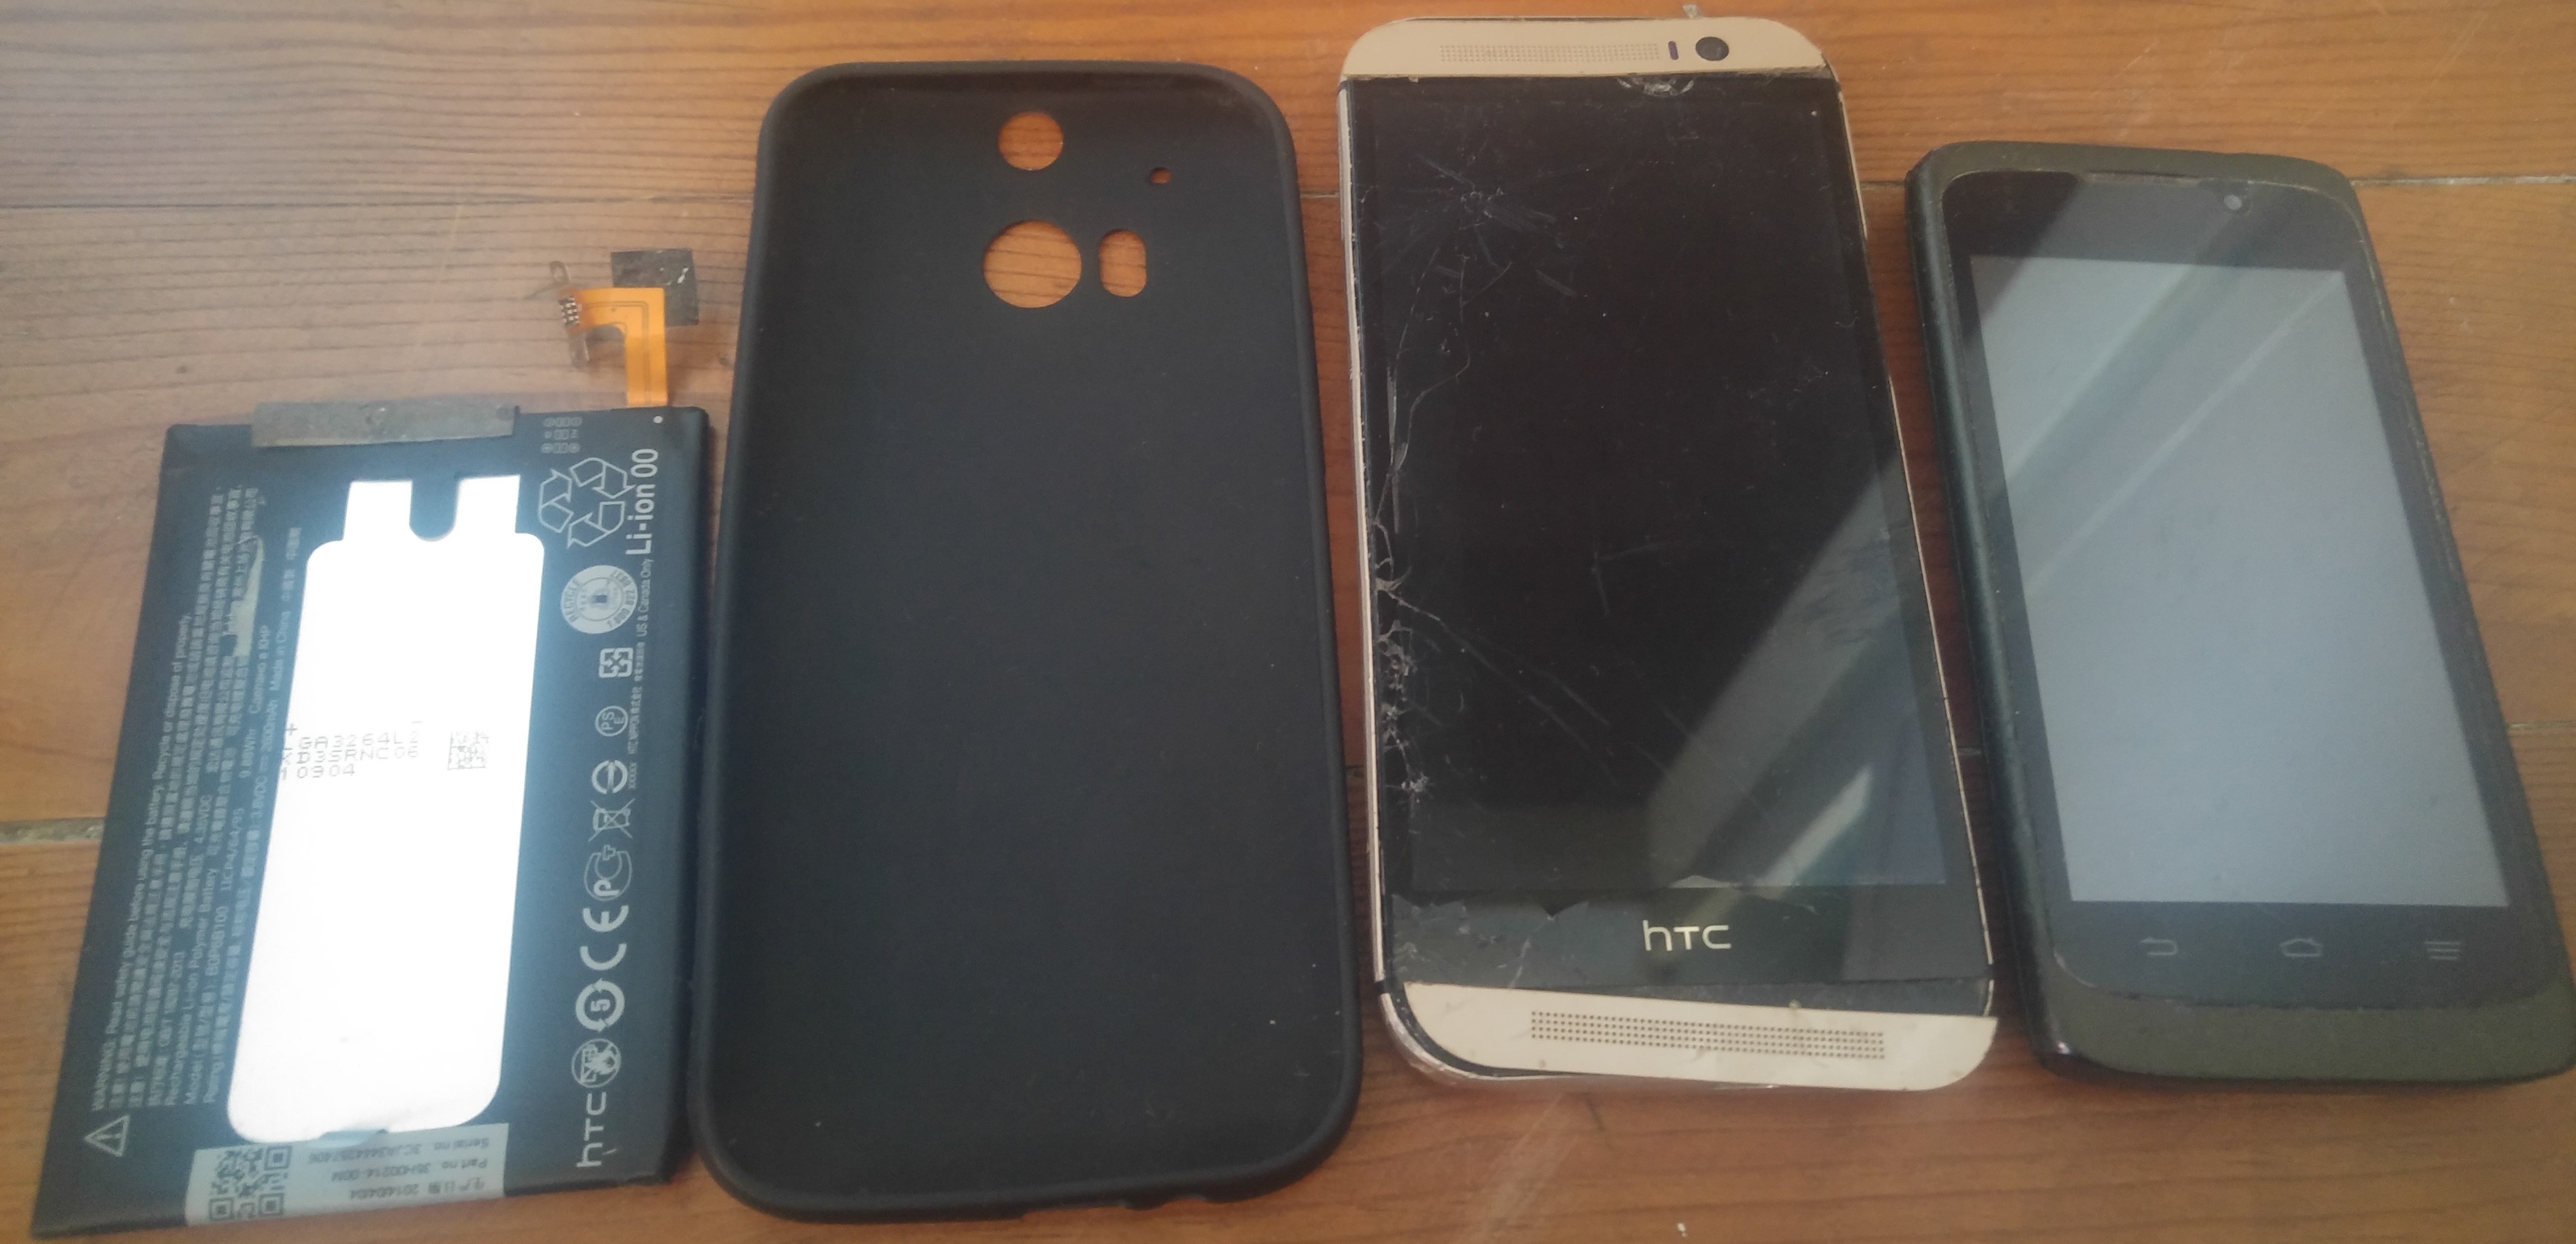 YEDEK PARÇA HTC M8-TURKCELL T40-NOKİA 6300-6030i-X302